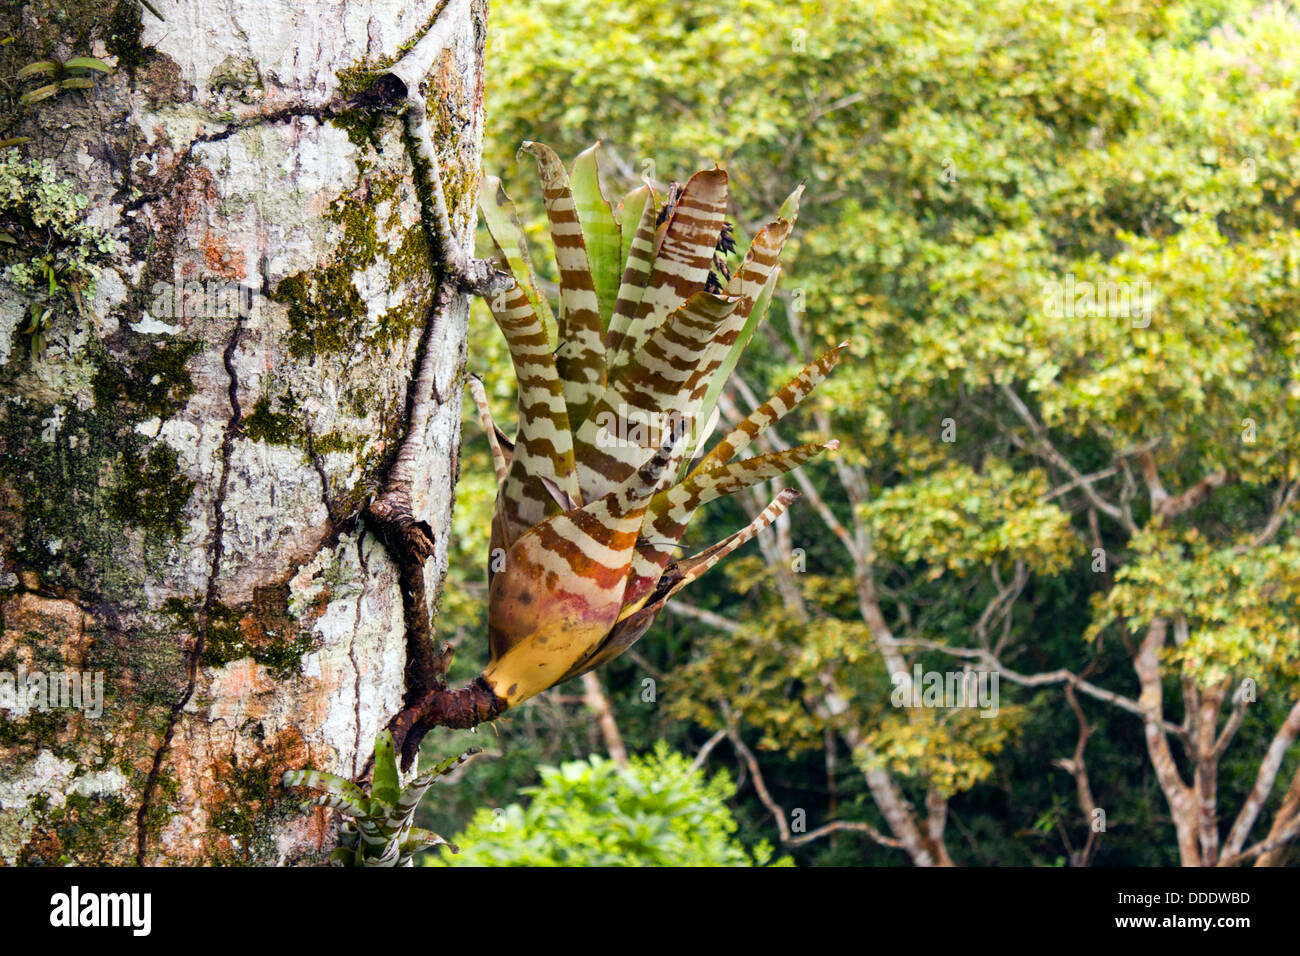 Bromeliad (Aechmea zebrina) growing on a tree trunk high in the forest canopy, Ecuador Stock Photo